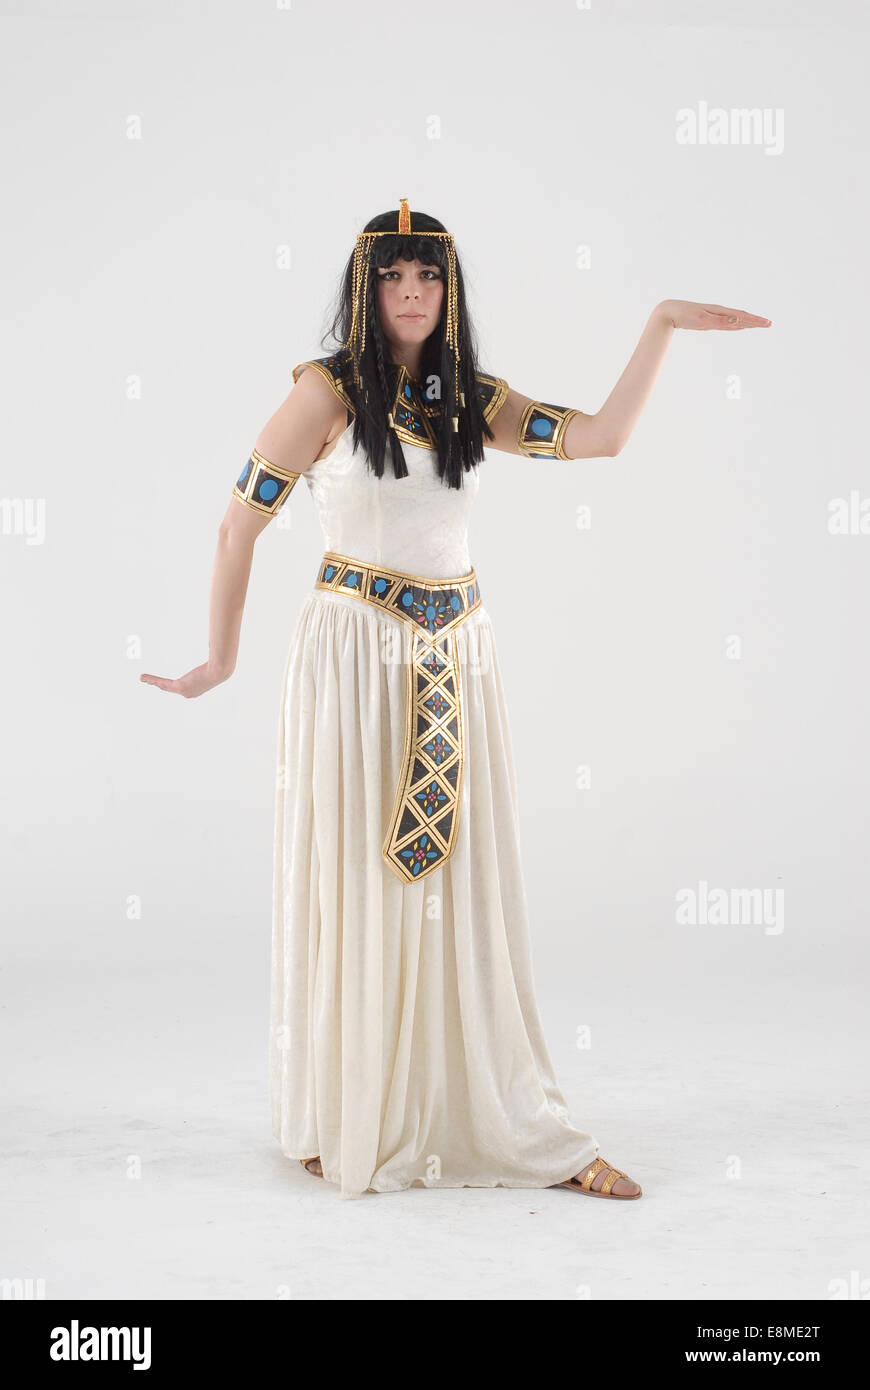 Cleopatra costume outfit fotografías e imágenes de alta resolución - Alamy